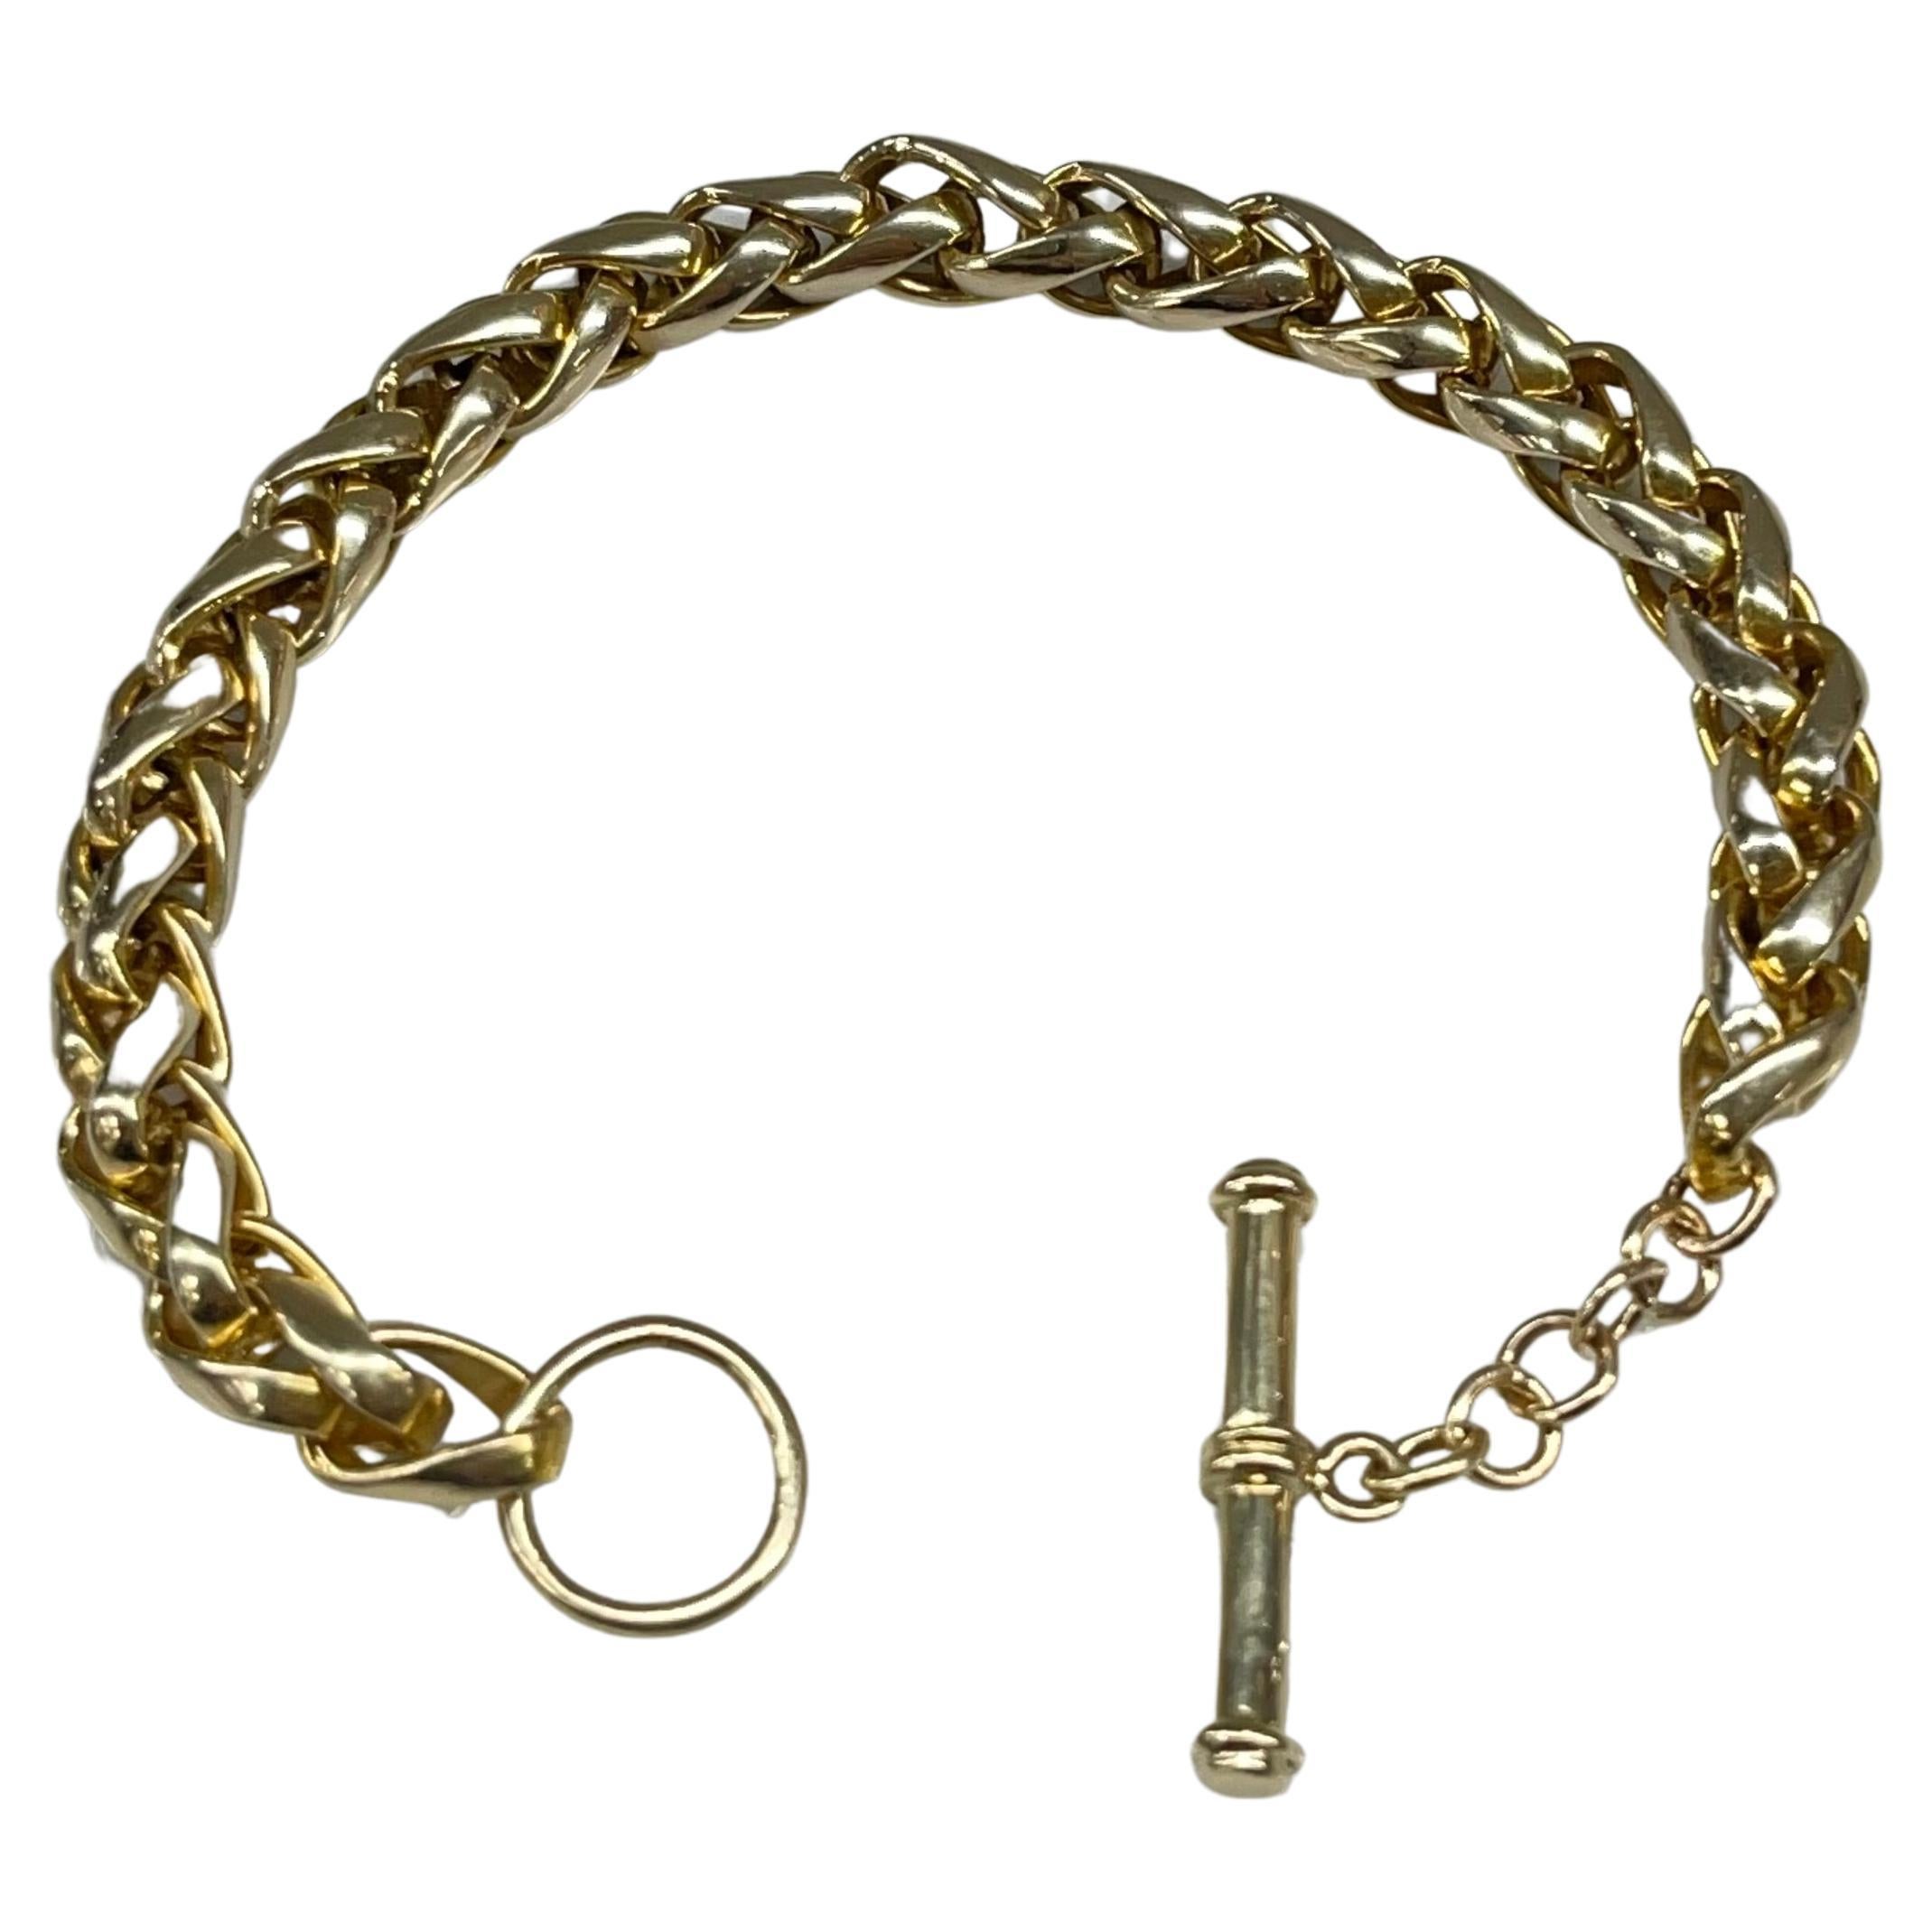 18K Yellow Gold Link Chain Bracelet 